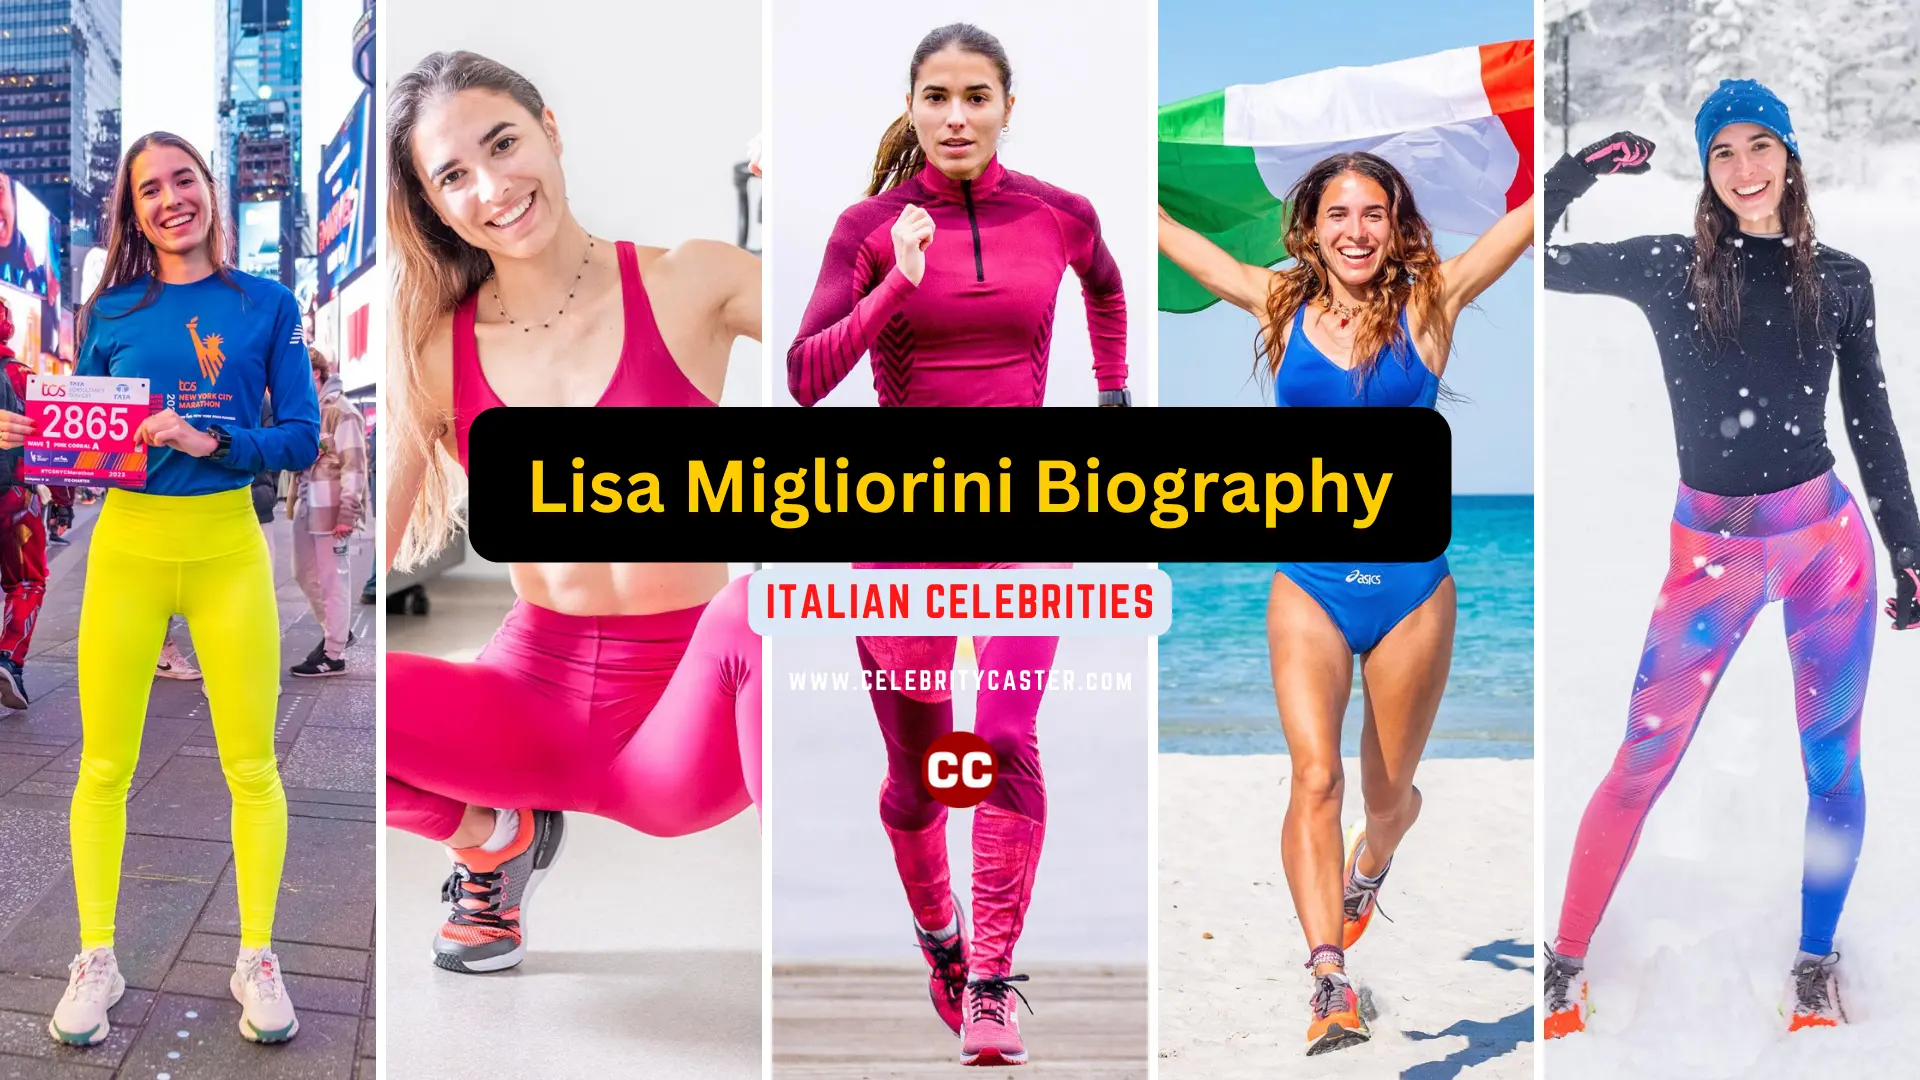 Lisa Migliorini Biography